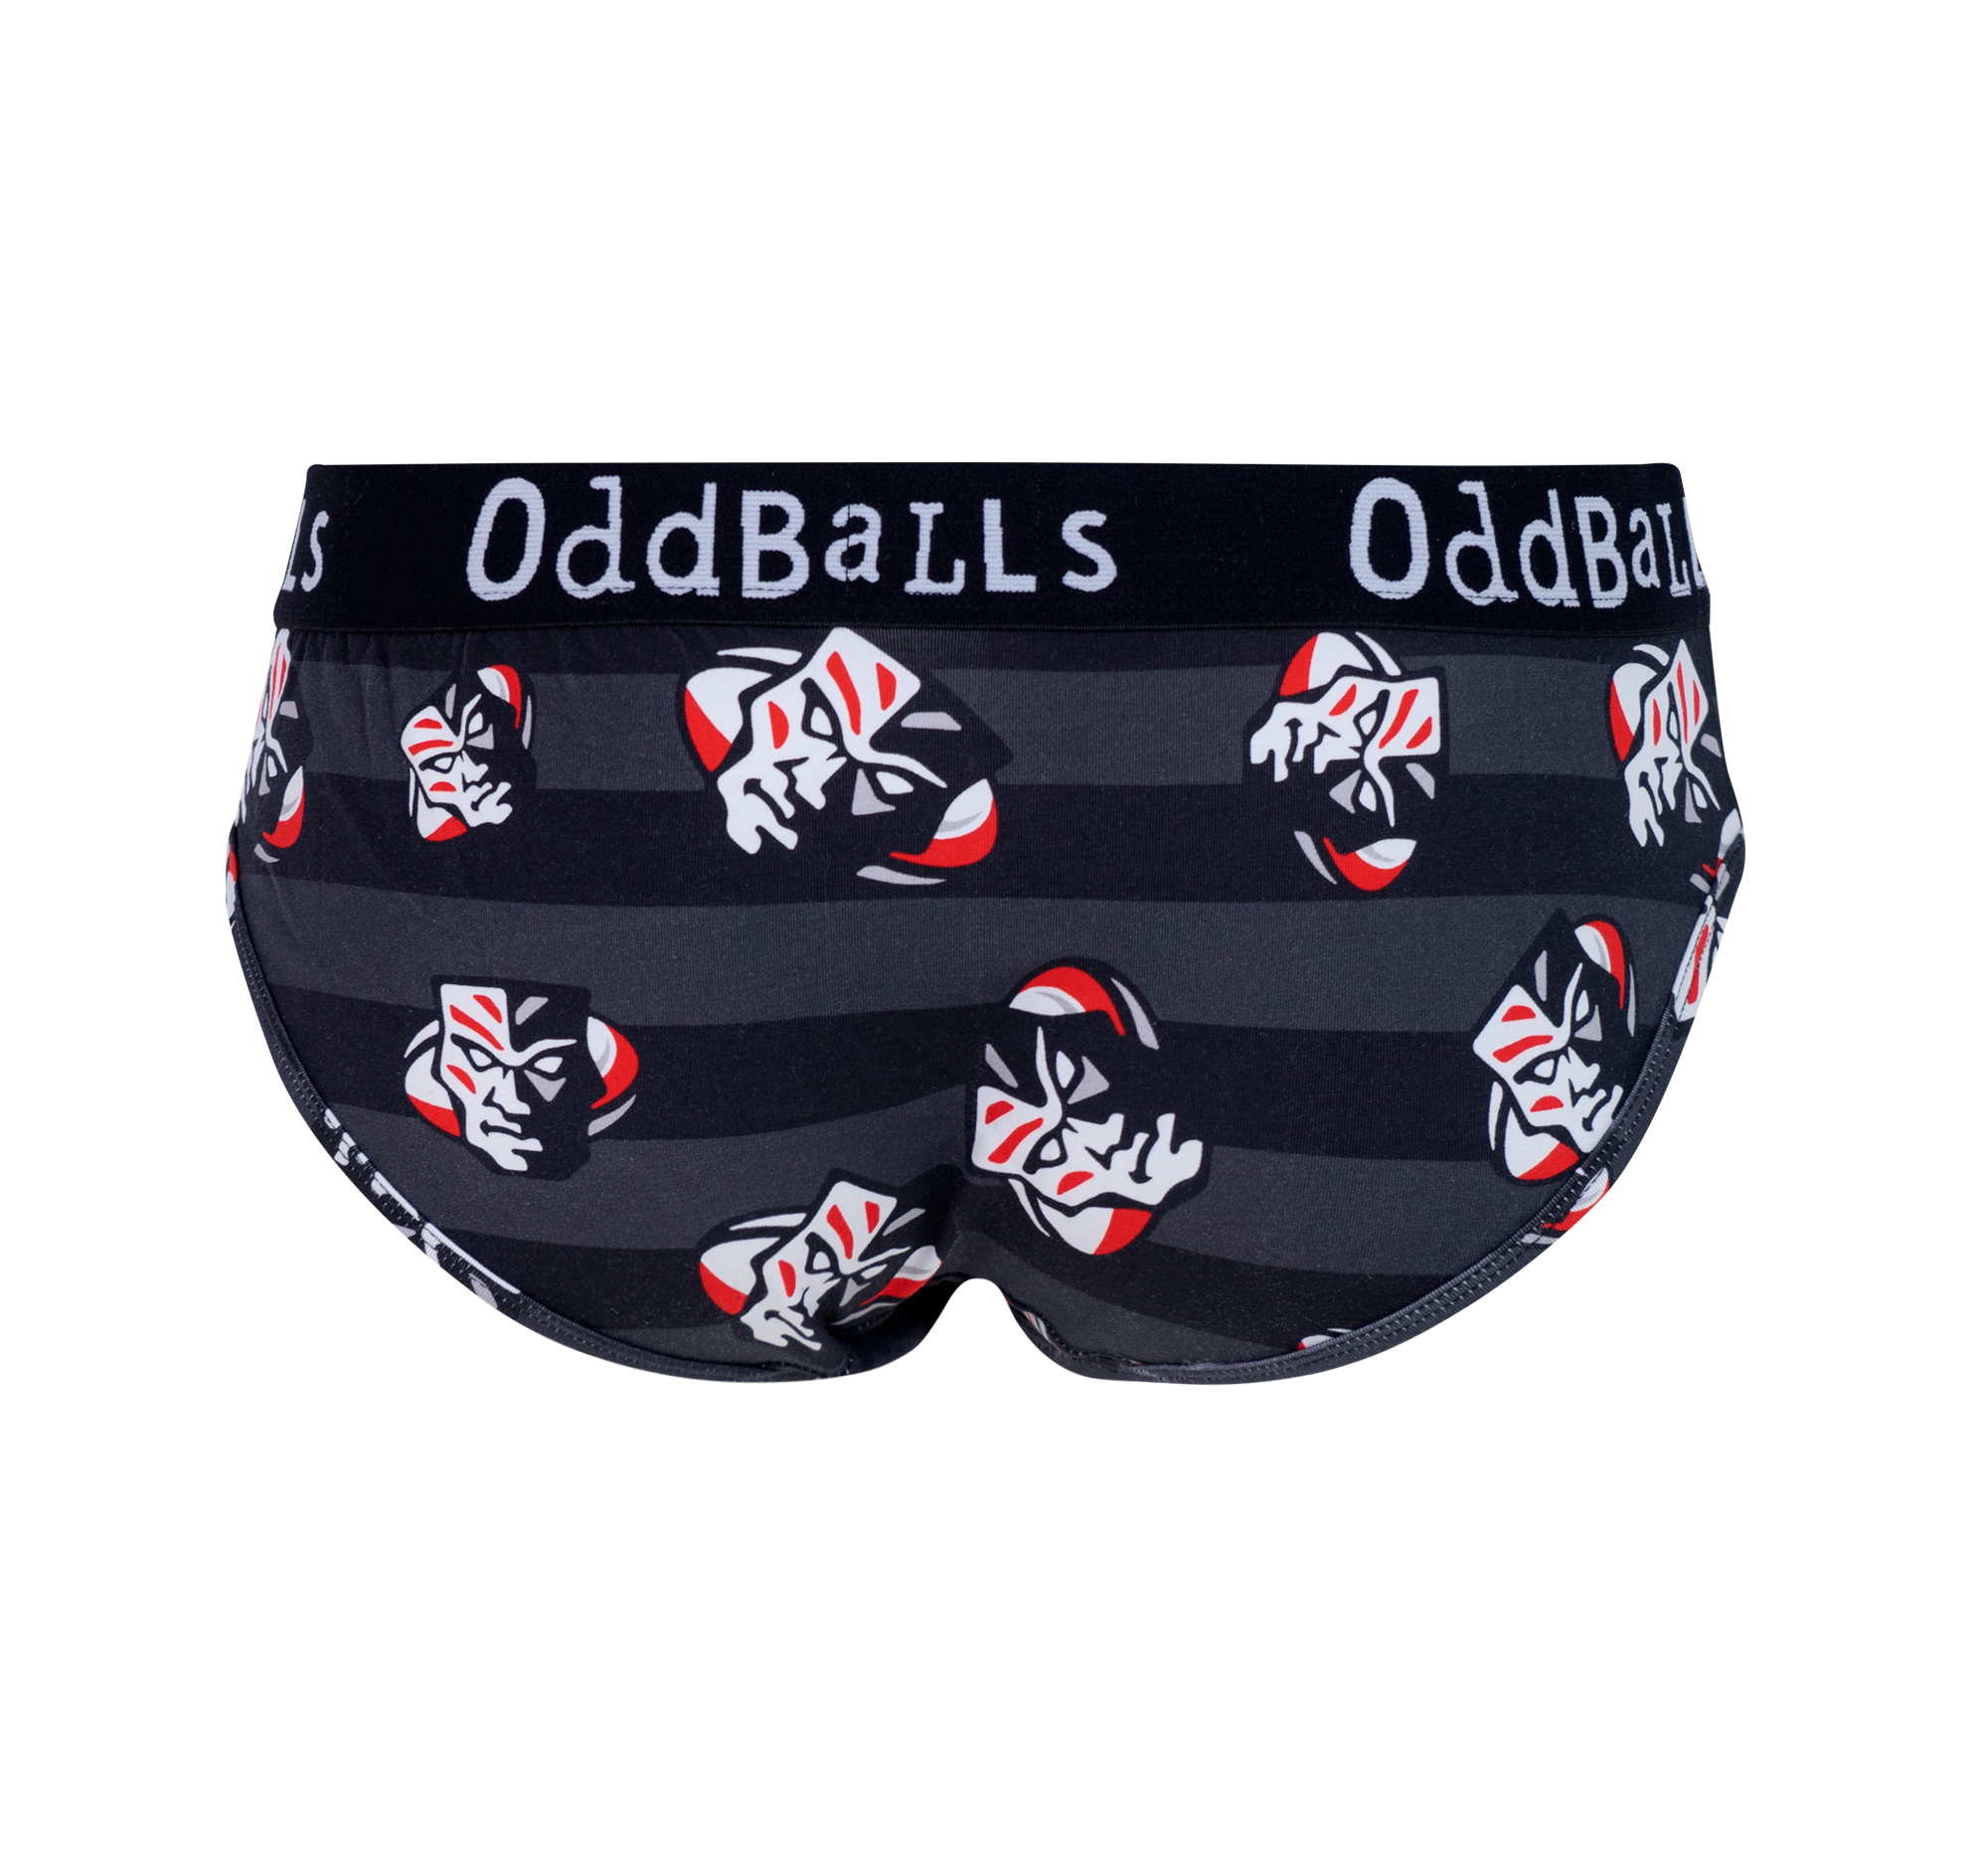 Warriors/Oddballs TC Awareness Underwear - Utah Warriors Rugby